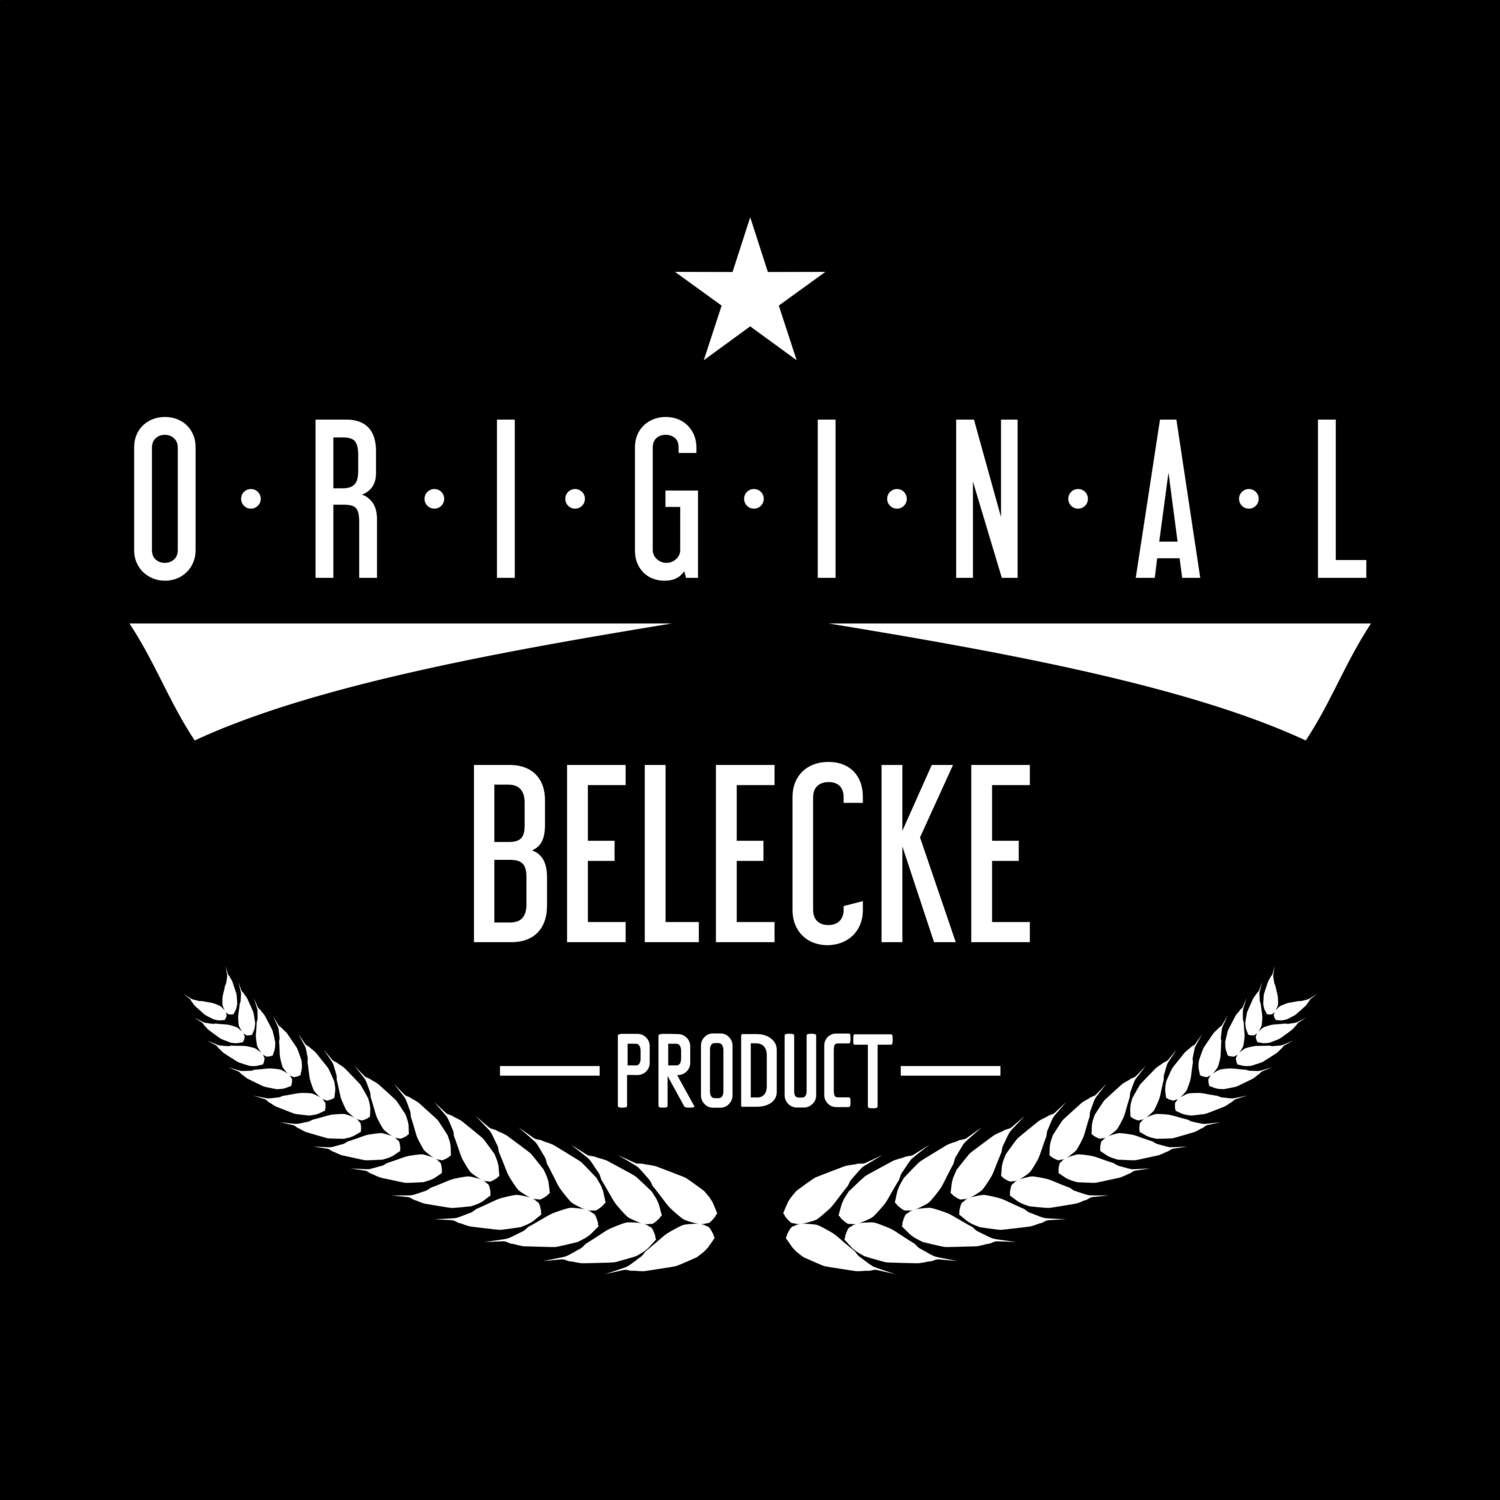 Belecke T-Shirt »Original Product«